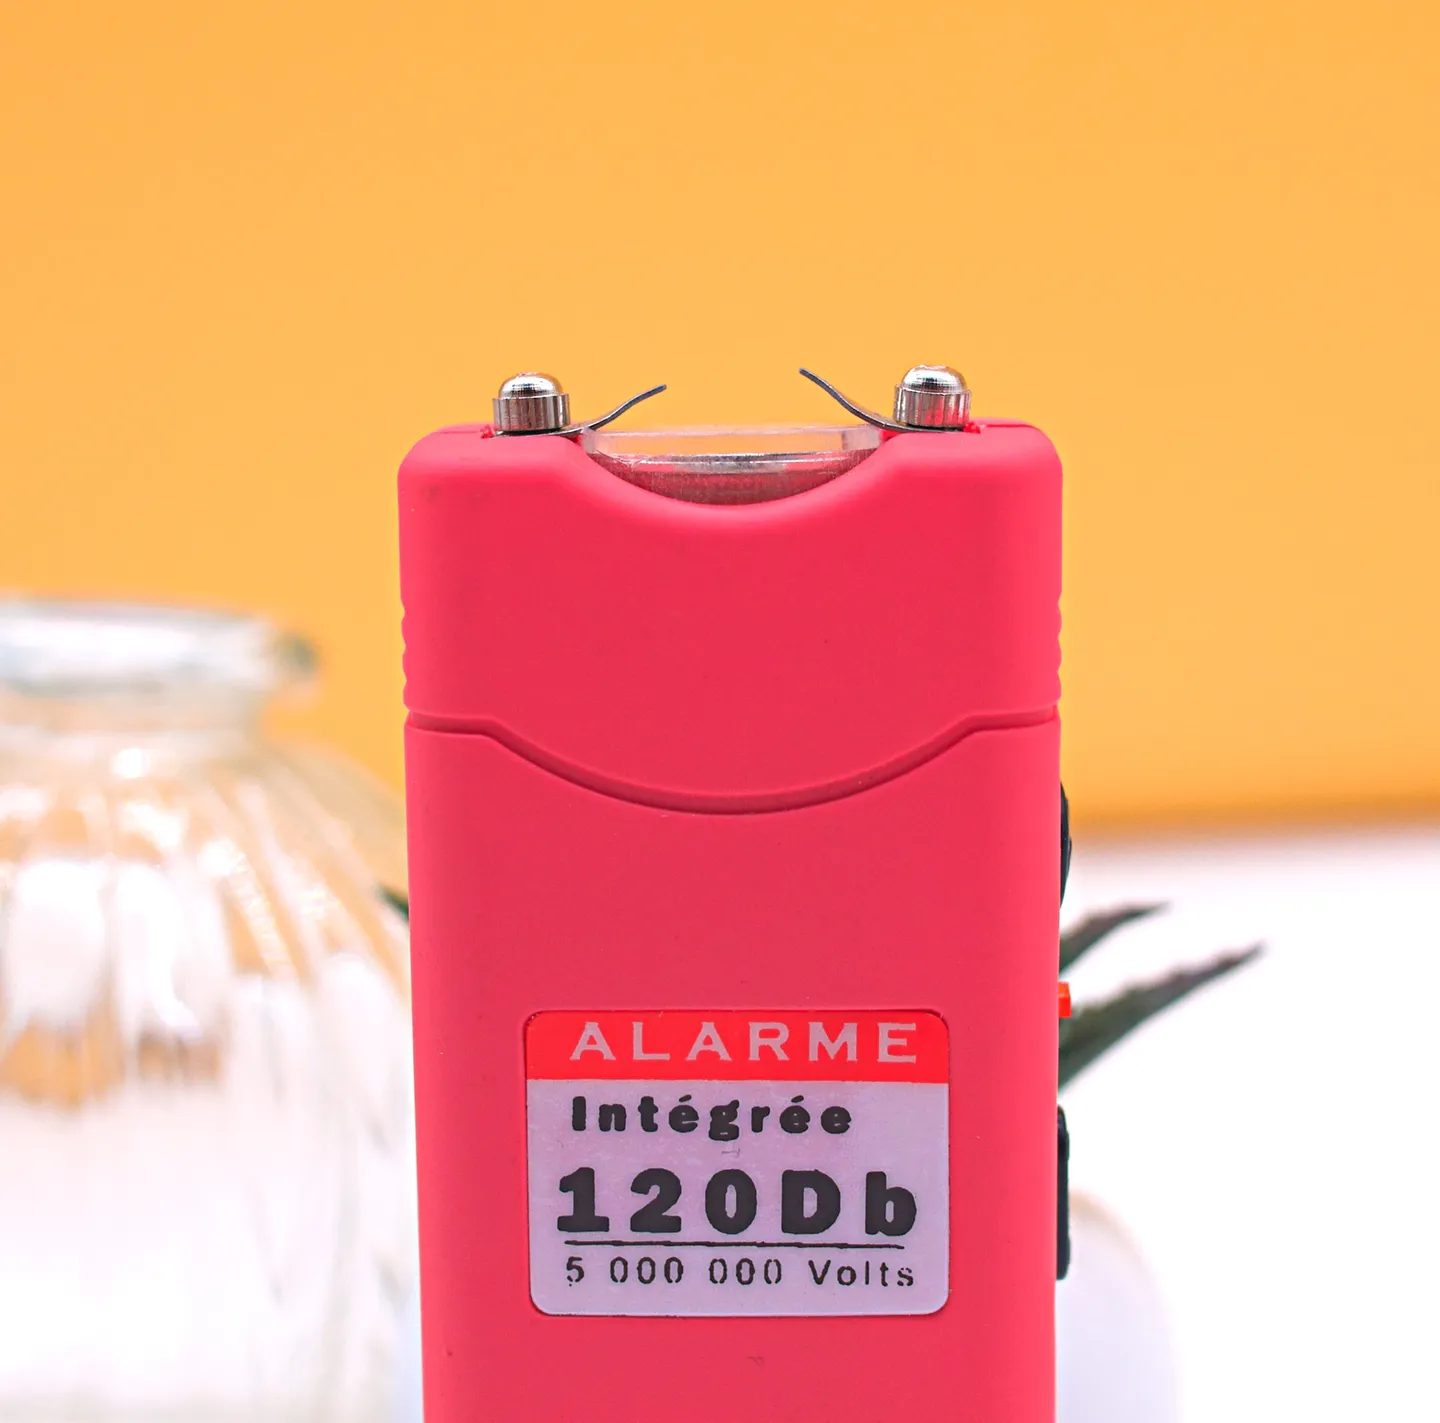 Shocker & Taser - Le Shocker de poche rose avec Alarme intégrée